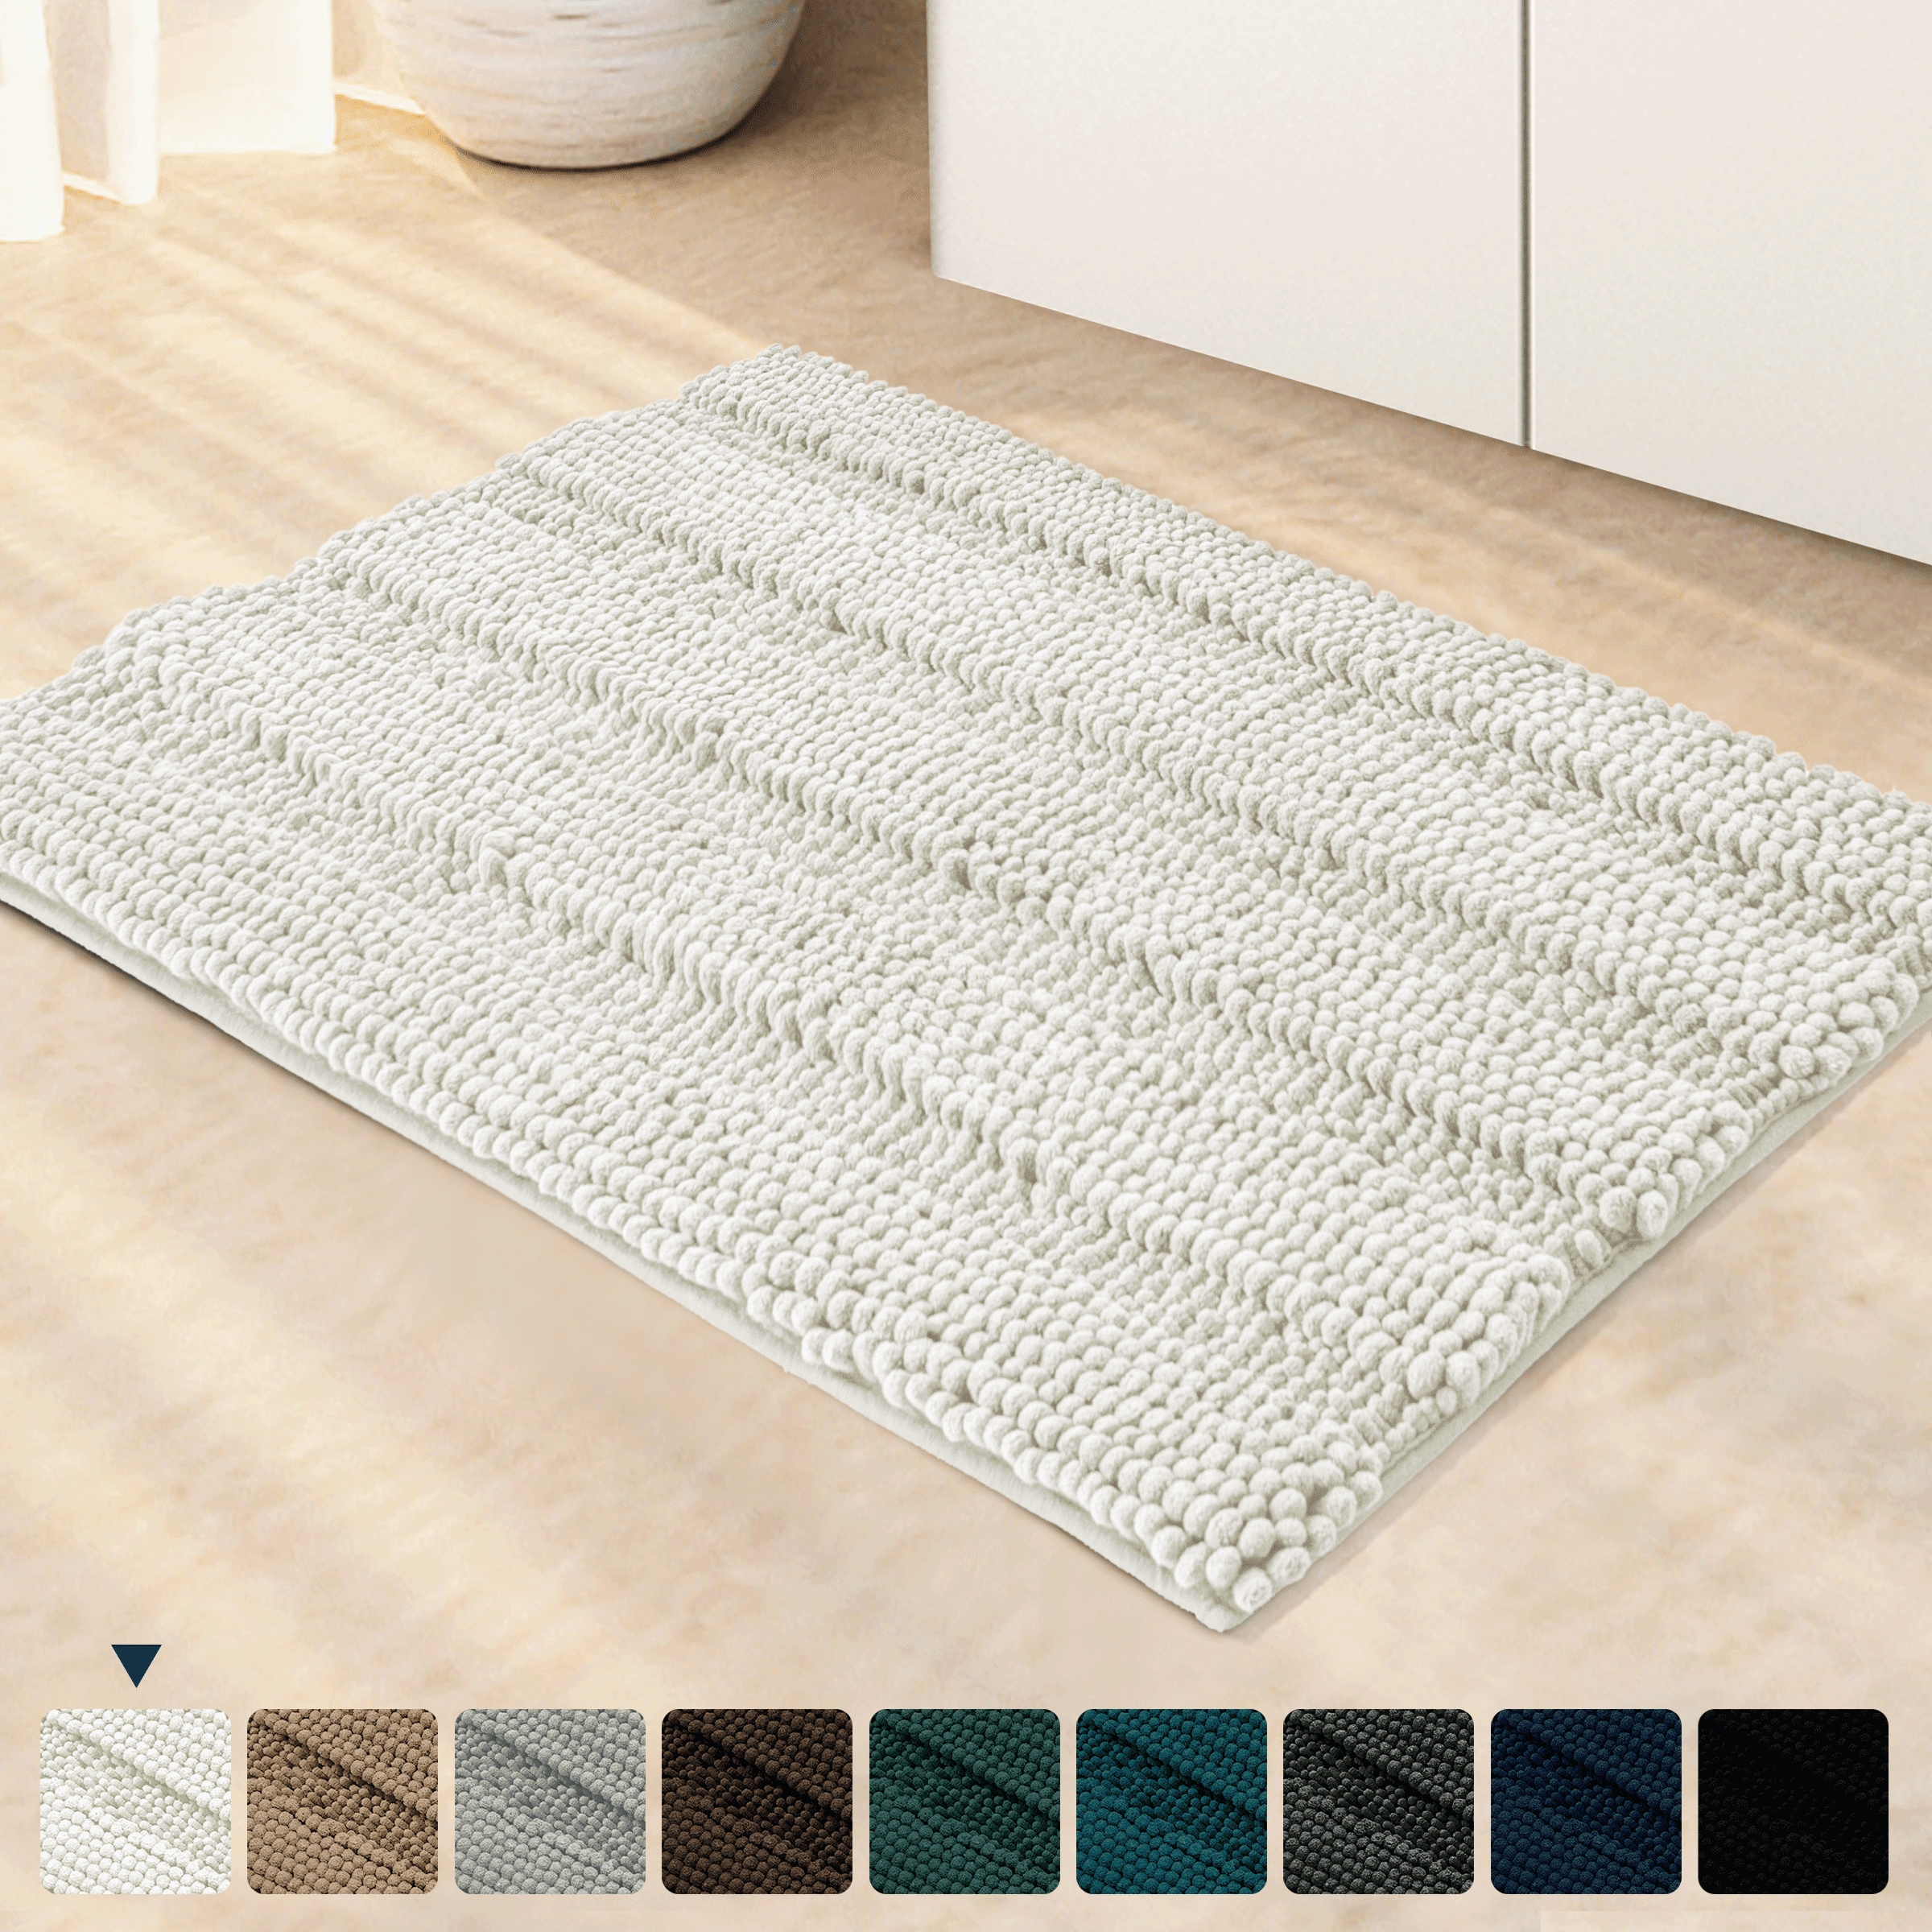 Rustic Color Stripe Mats Non Slip Bathroom Kitchen Runner Floor Mat Carpets 